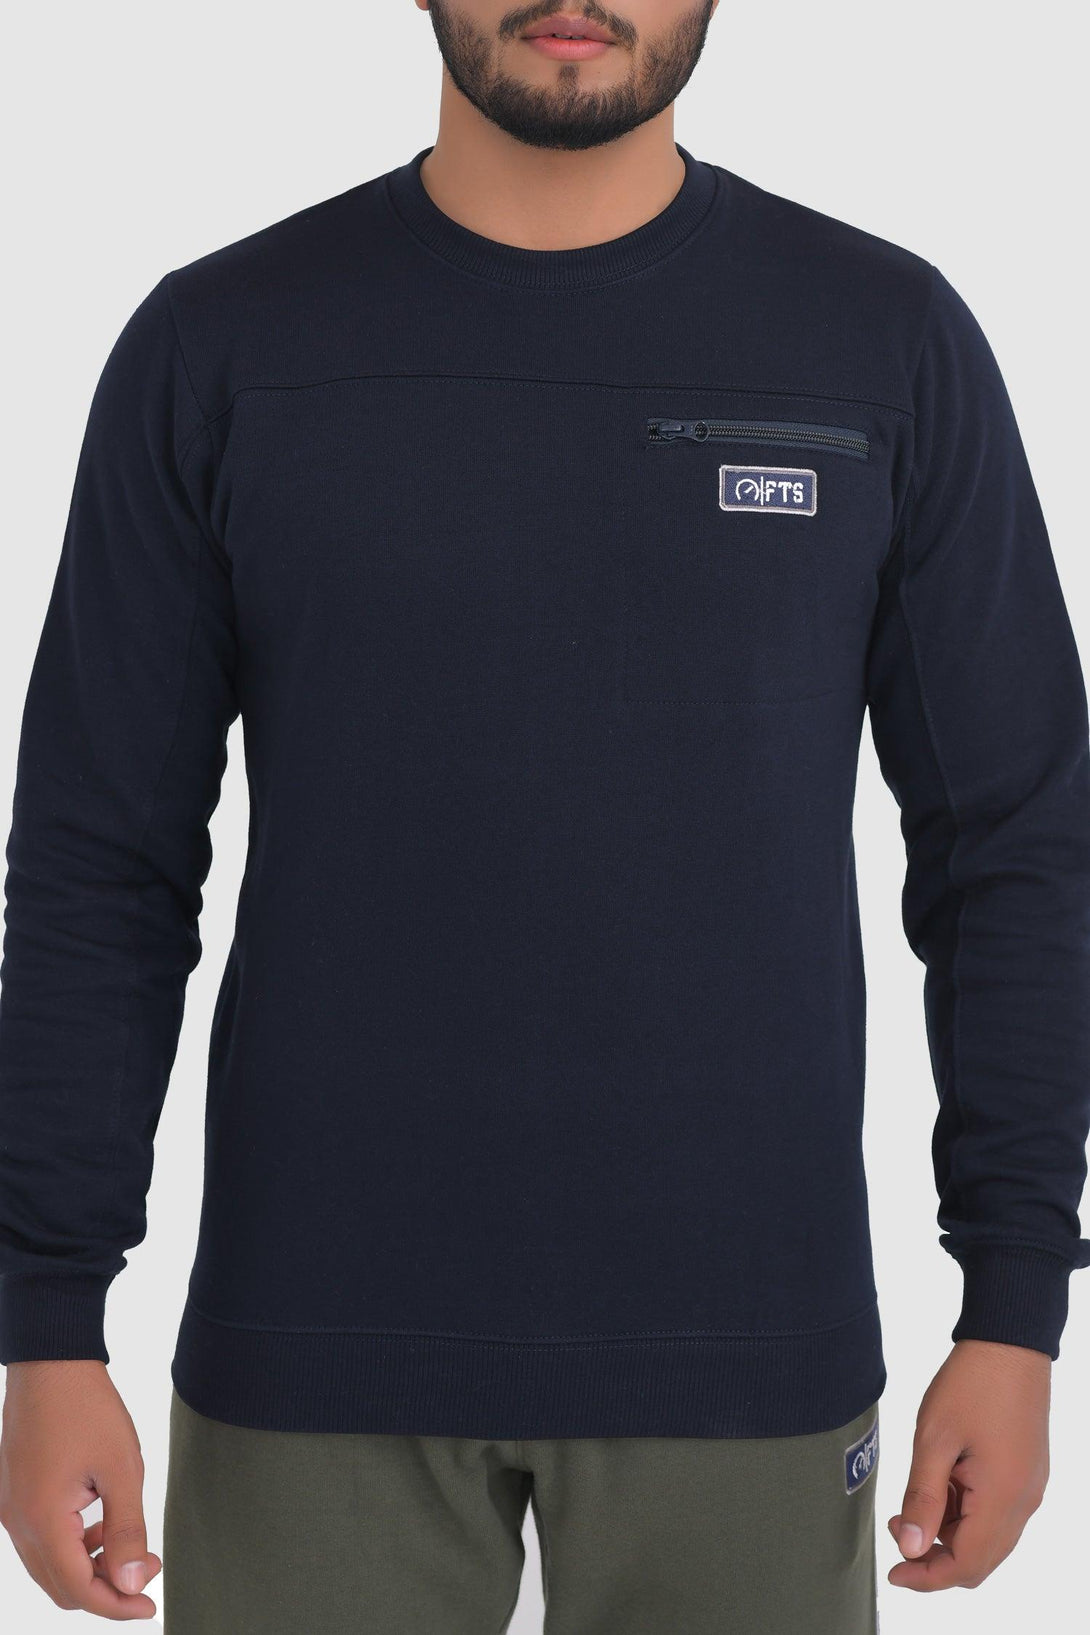 Sweatshirts GREY - NAVY - Pack of 2 - FTS